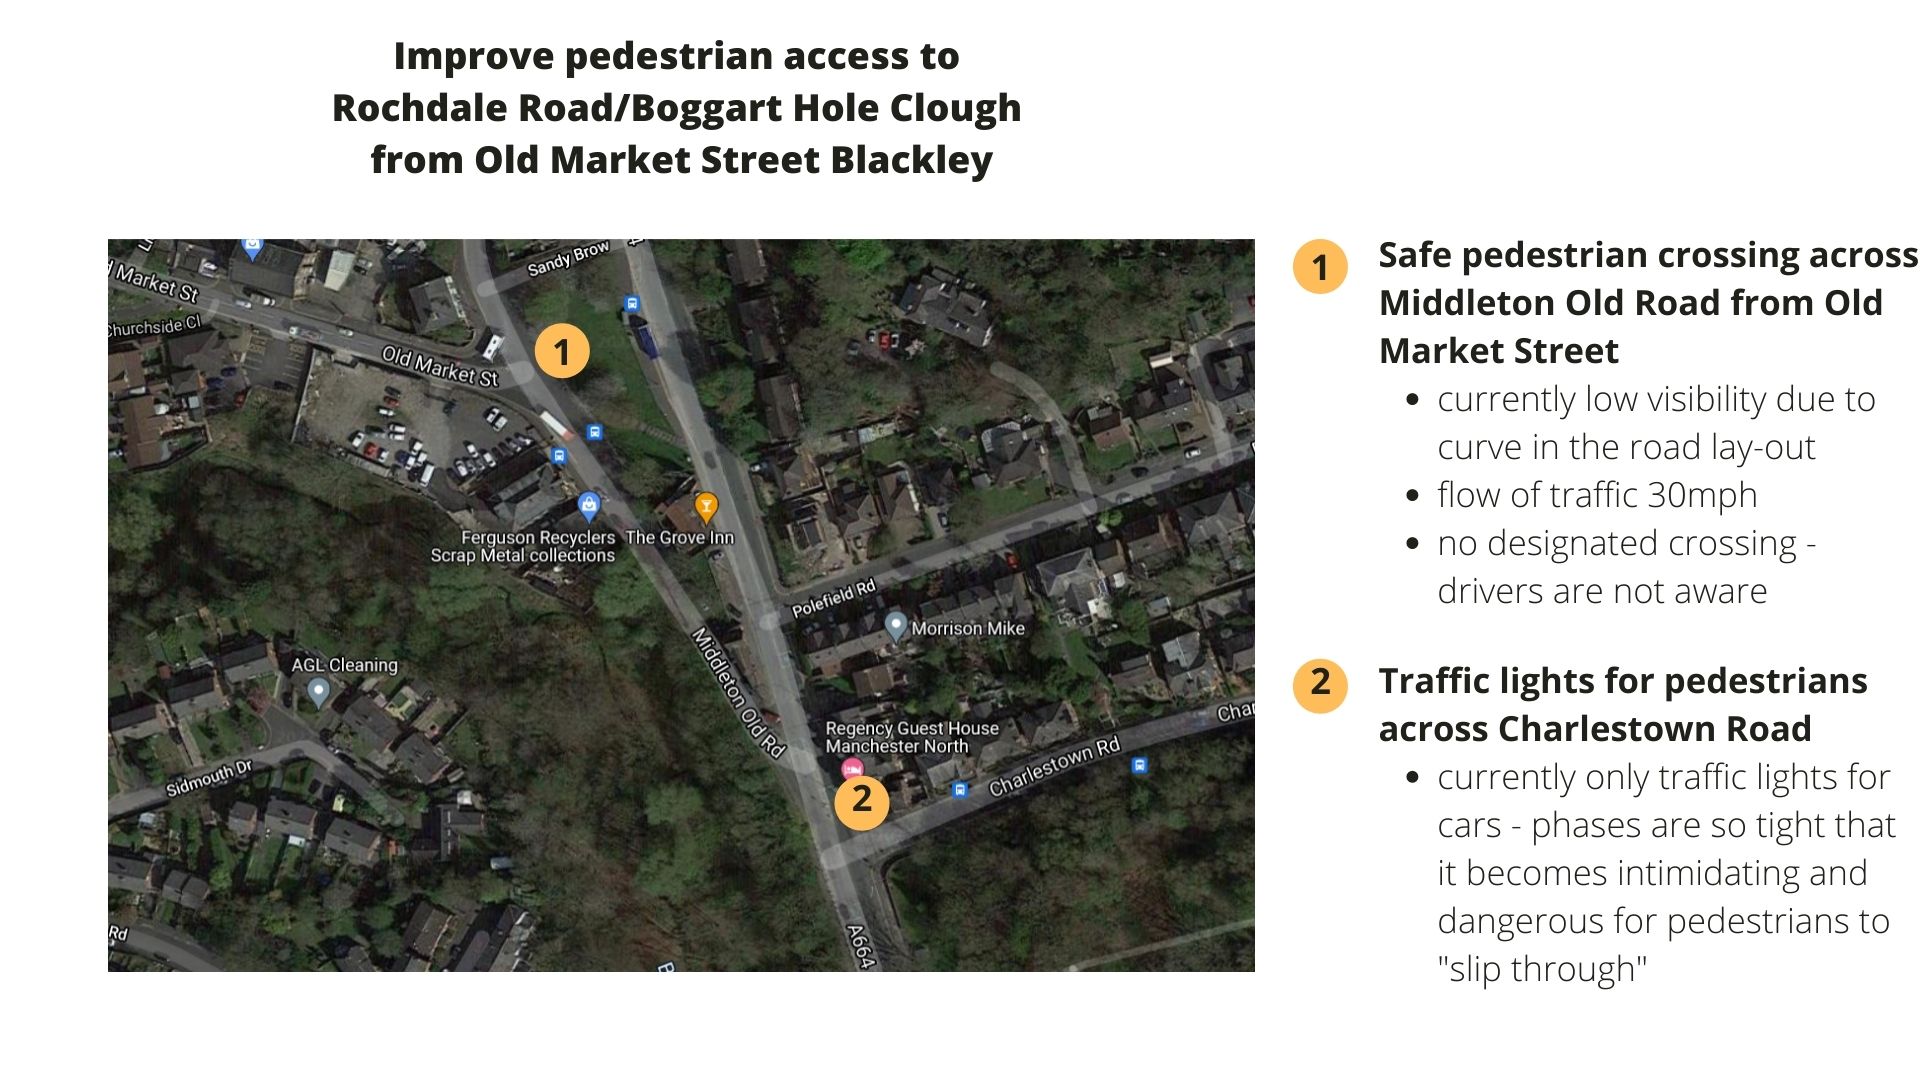 Walk Ride Blackley publish open letter to councillors